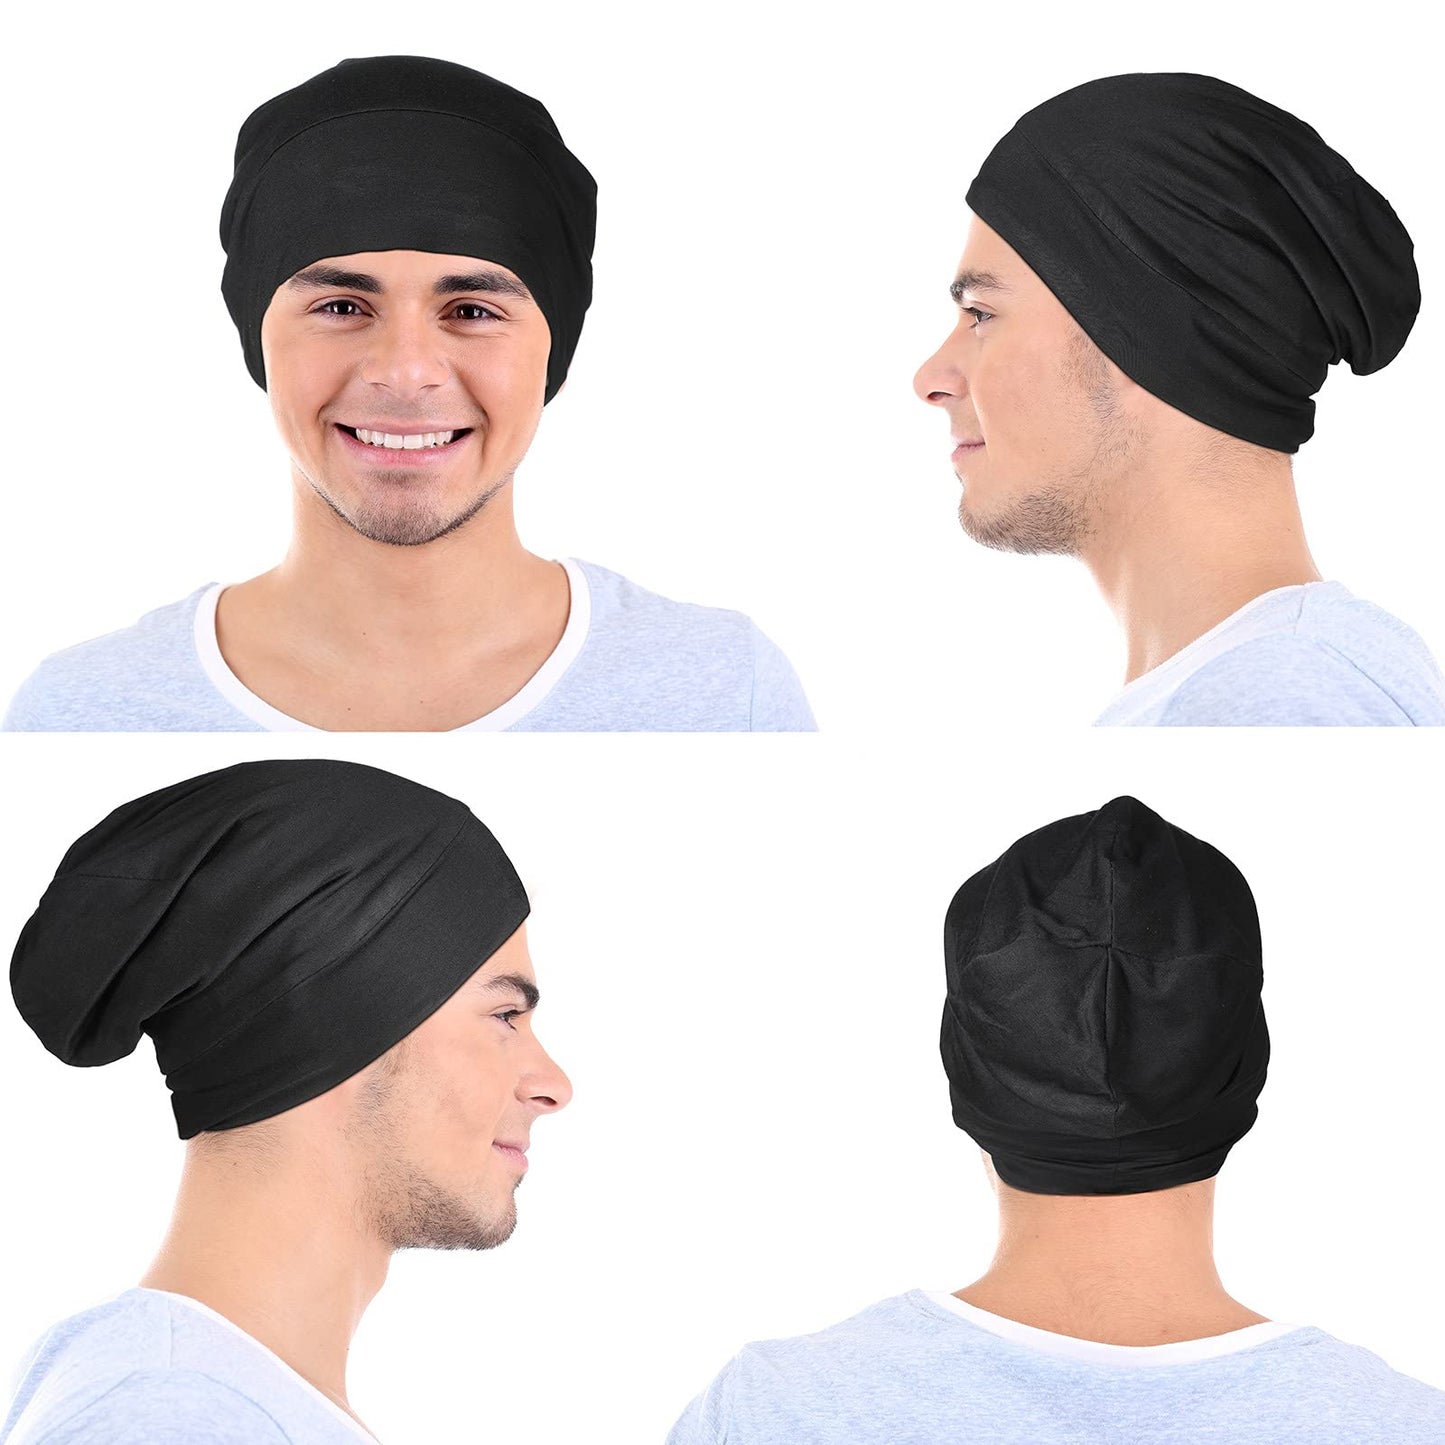 4 Pieces Hair Bonnet for Men Silk Satin Sleep Cap Cover Night Sleeping Beanie Gifts for Boyfriend,Husband Dad (Multi-Colors)